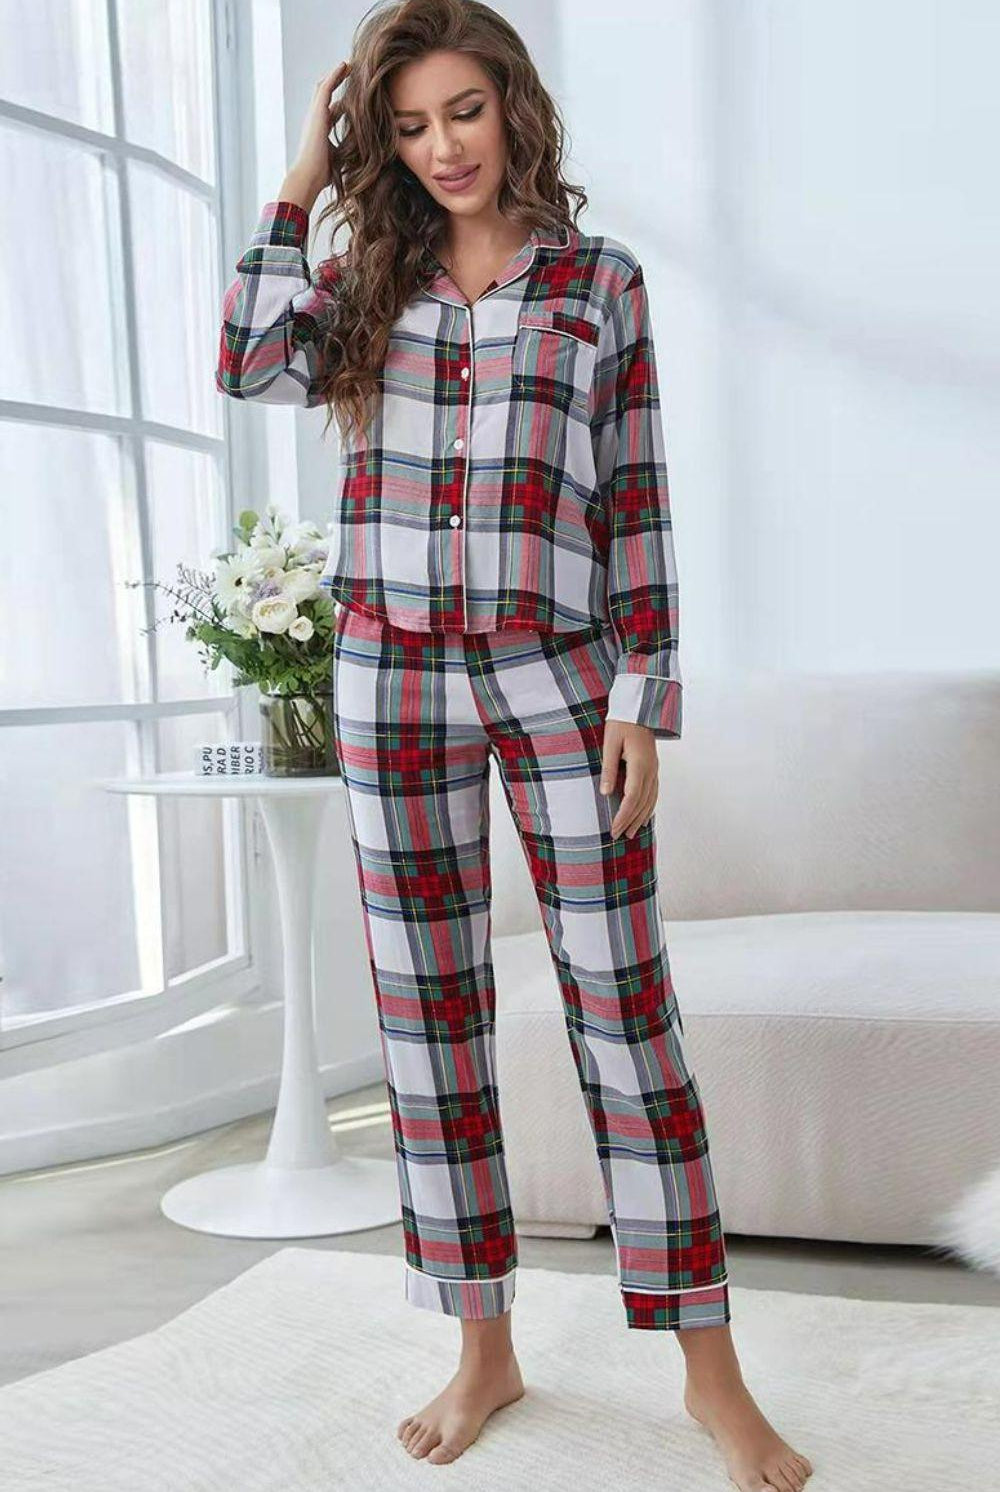 Women's Sleepwear/Loungewear Plaid Top and Pants Set